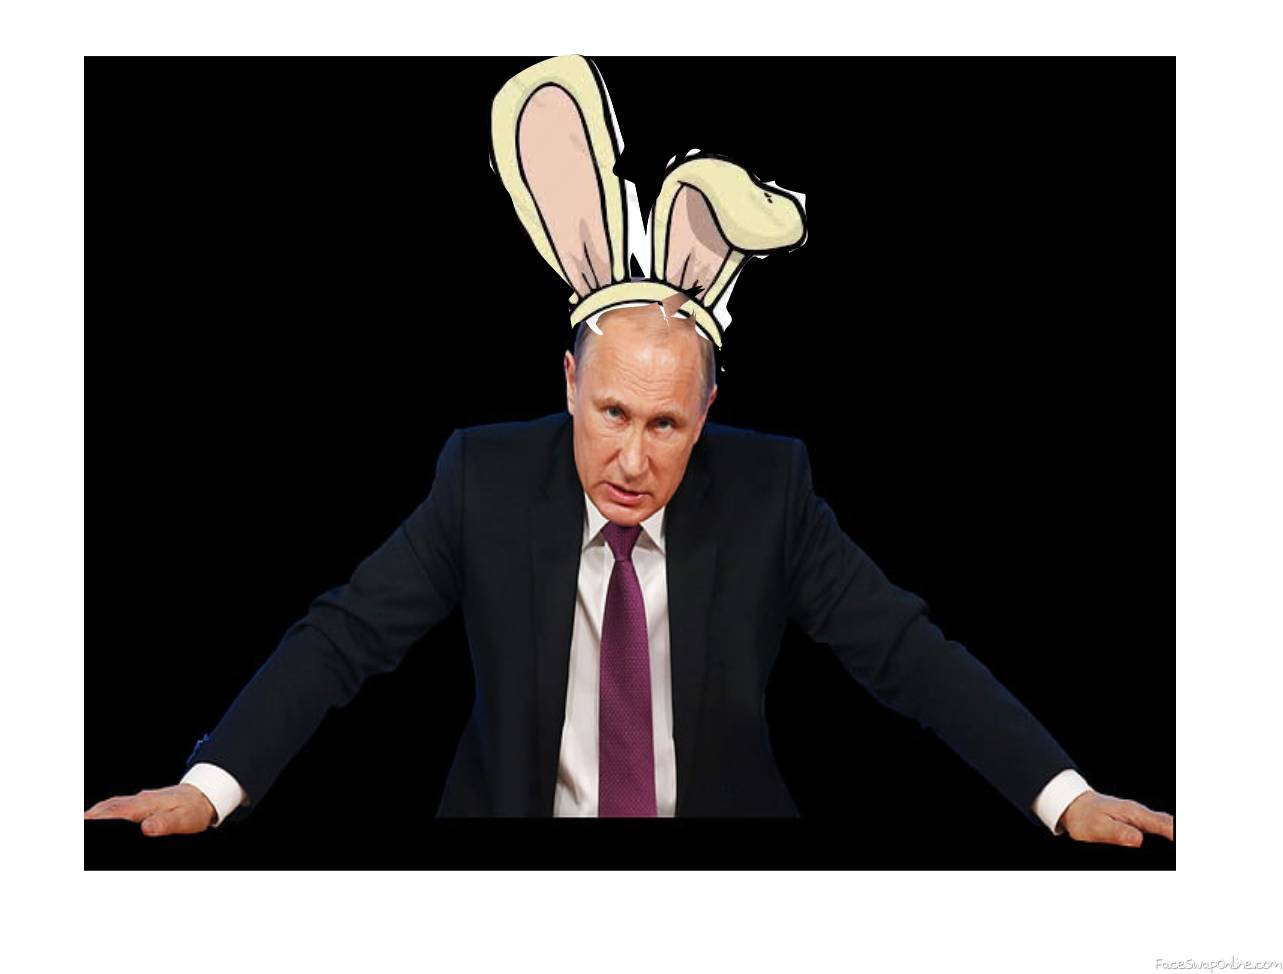 Putin Rabbit